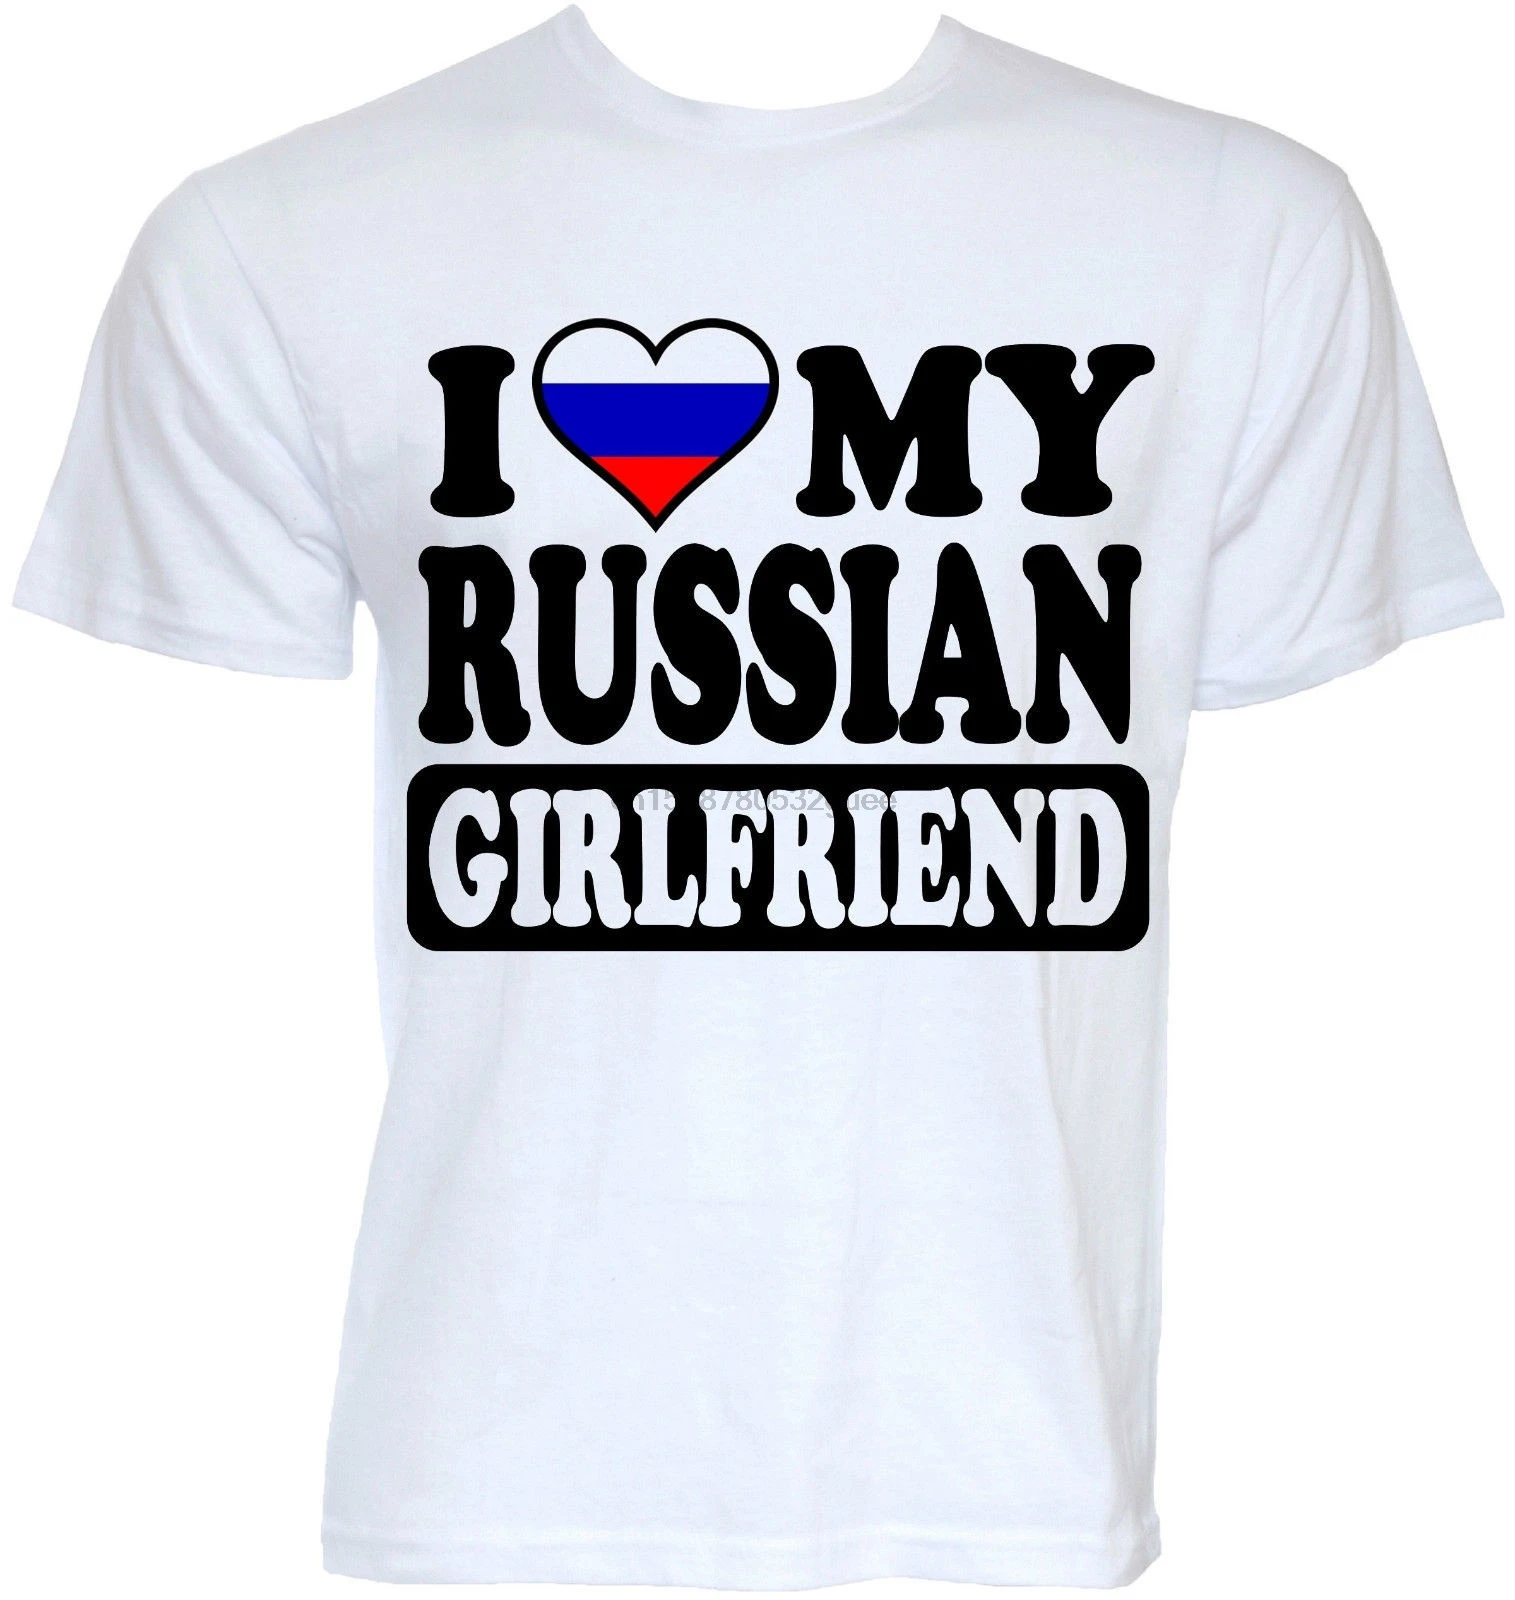 RUSSIA T-SHIRTS MENS FUNNY COOL NOVELTY RUSSIAN GIRLFRIEND JOKE GIFTS T-SHIRT 